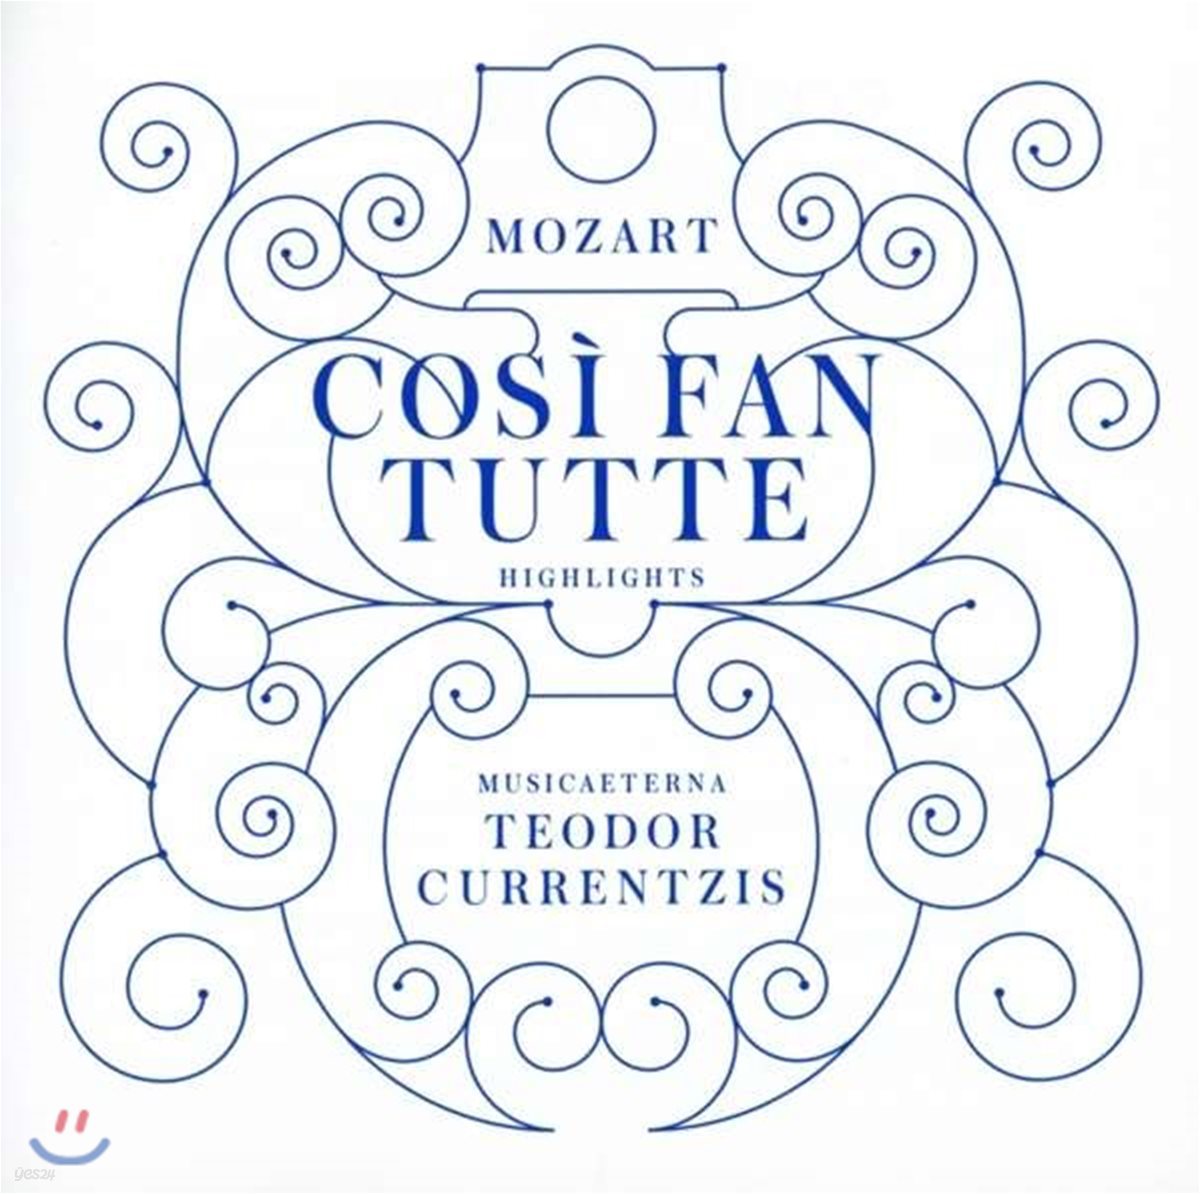 Musica Eeterna 모차르트: 코지 판 투테 [하이라이트] 테오도르 쿠렌치스 (Mozart: Cosi fan tutte, K588)